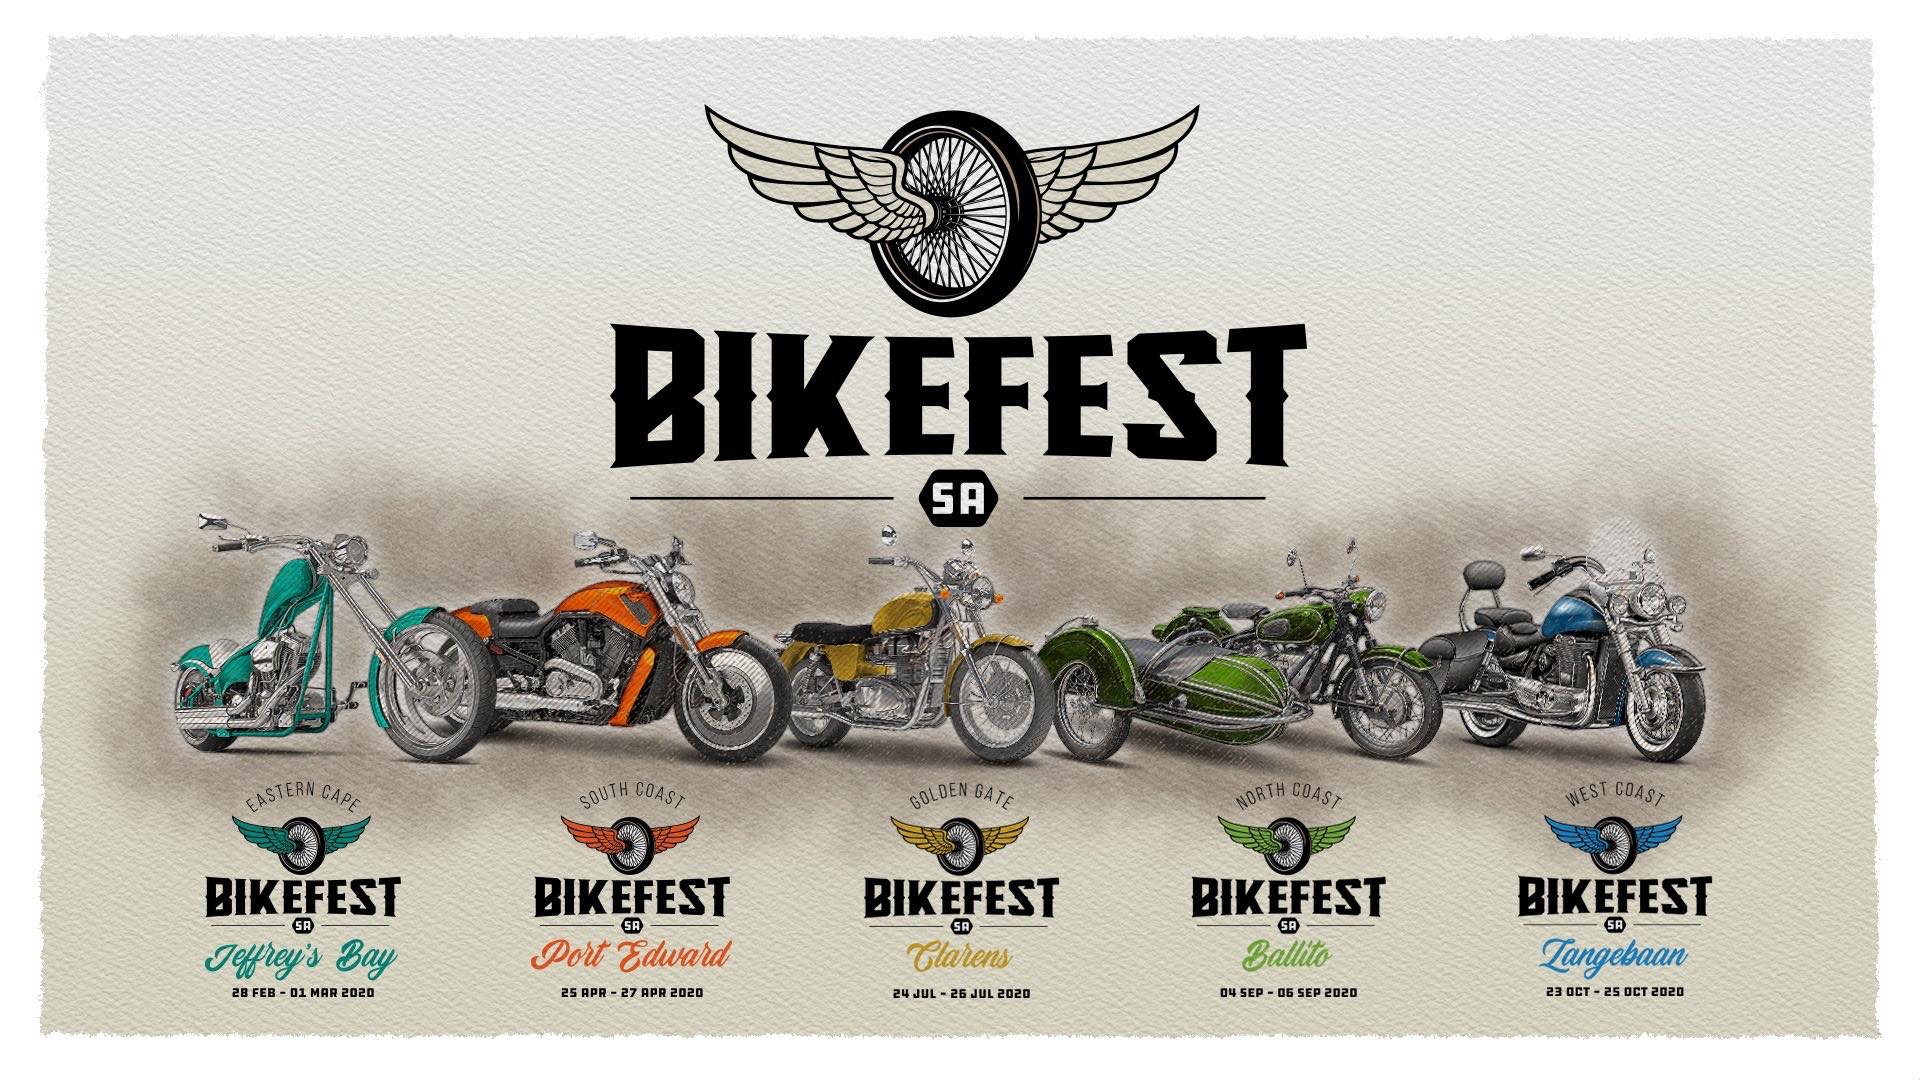 Bike Fest SA 2020 - Clarens - Golden Gate - South Africa